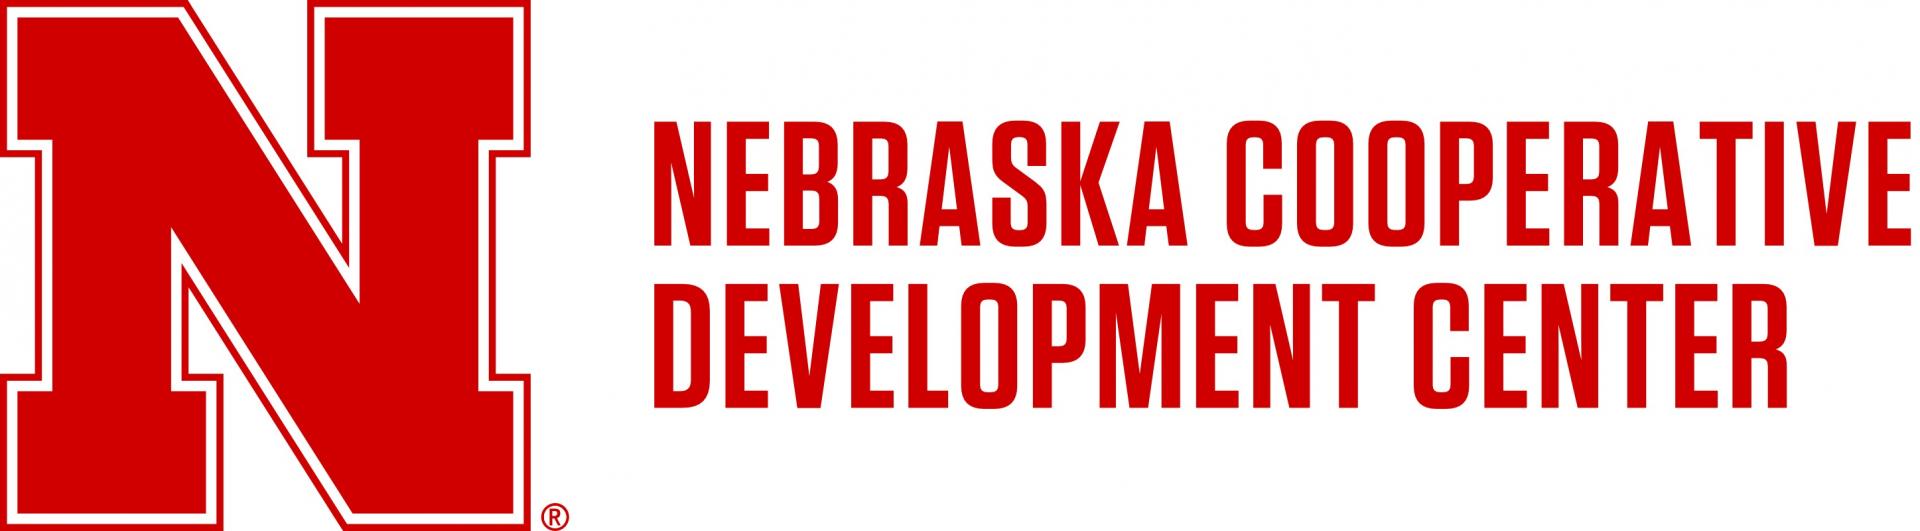 Nebraska-Cooperative-Development-Center-Logo